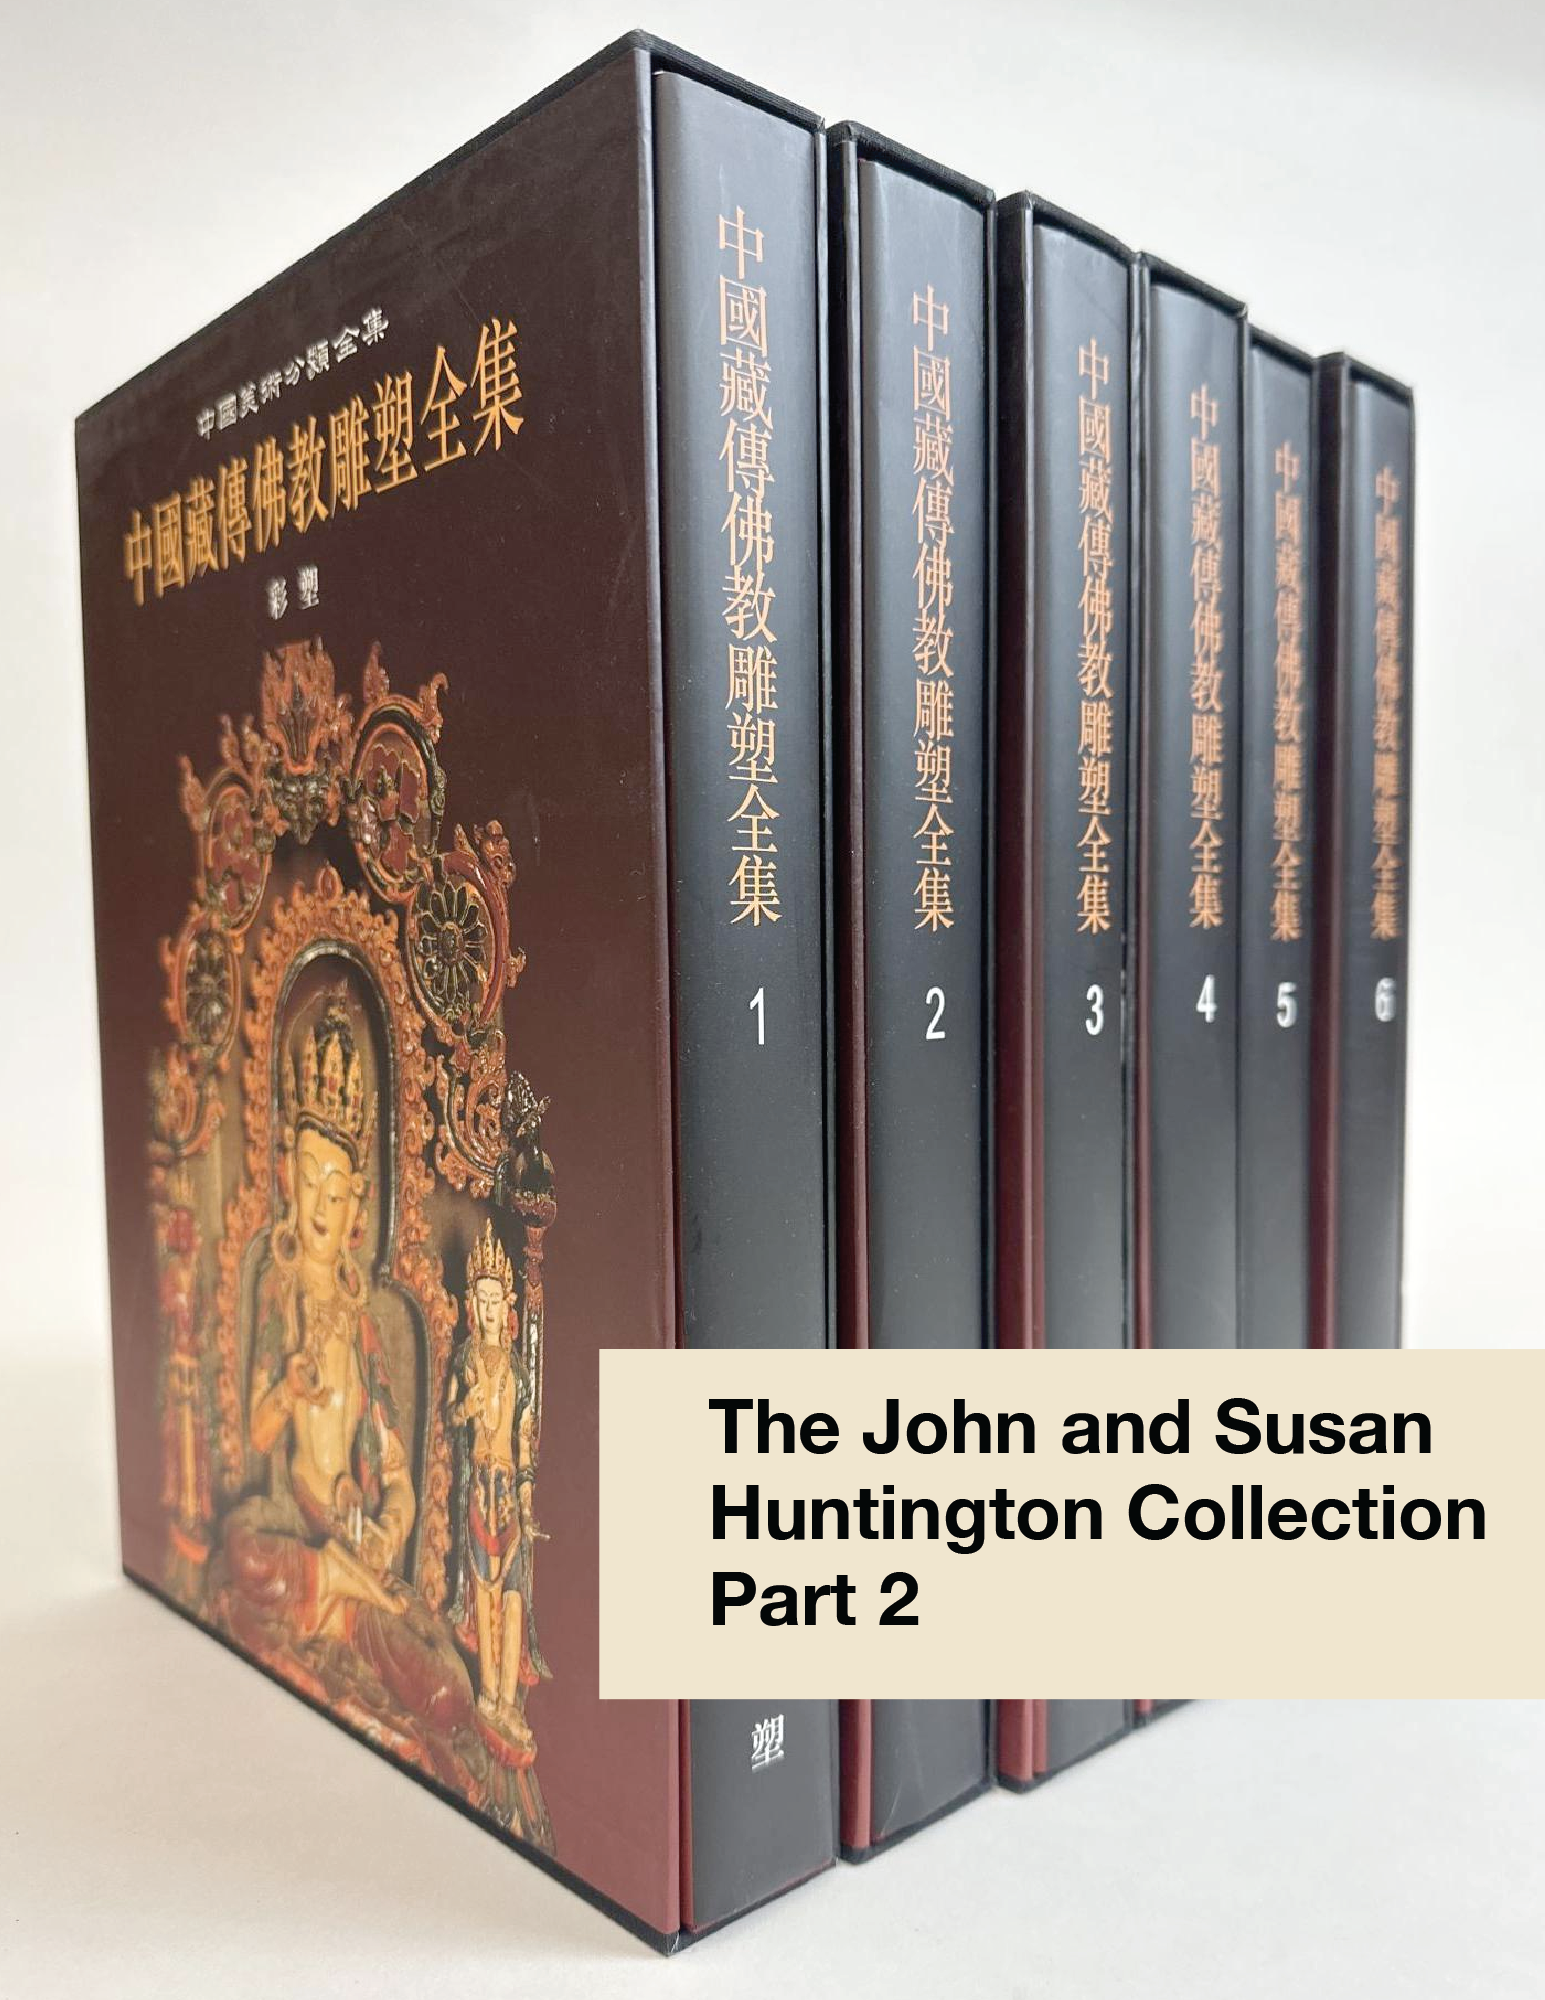 E-List #59: John and Susan Huntington Collection: Part 2